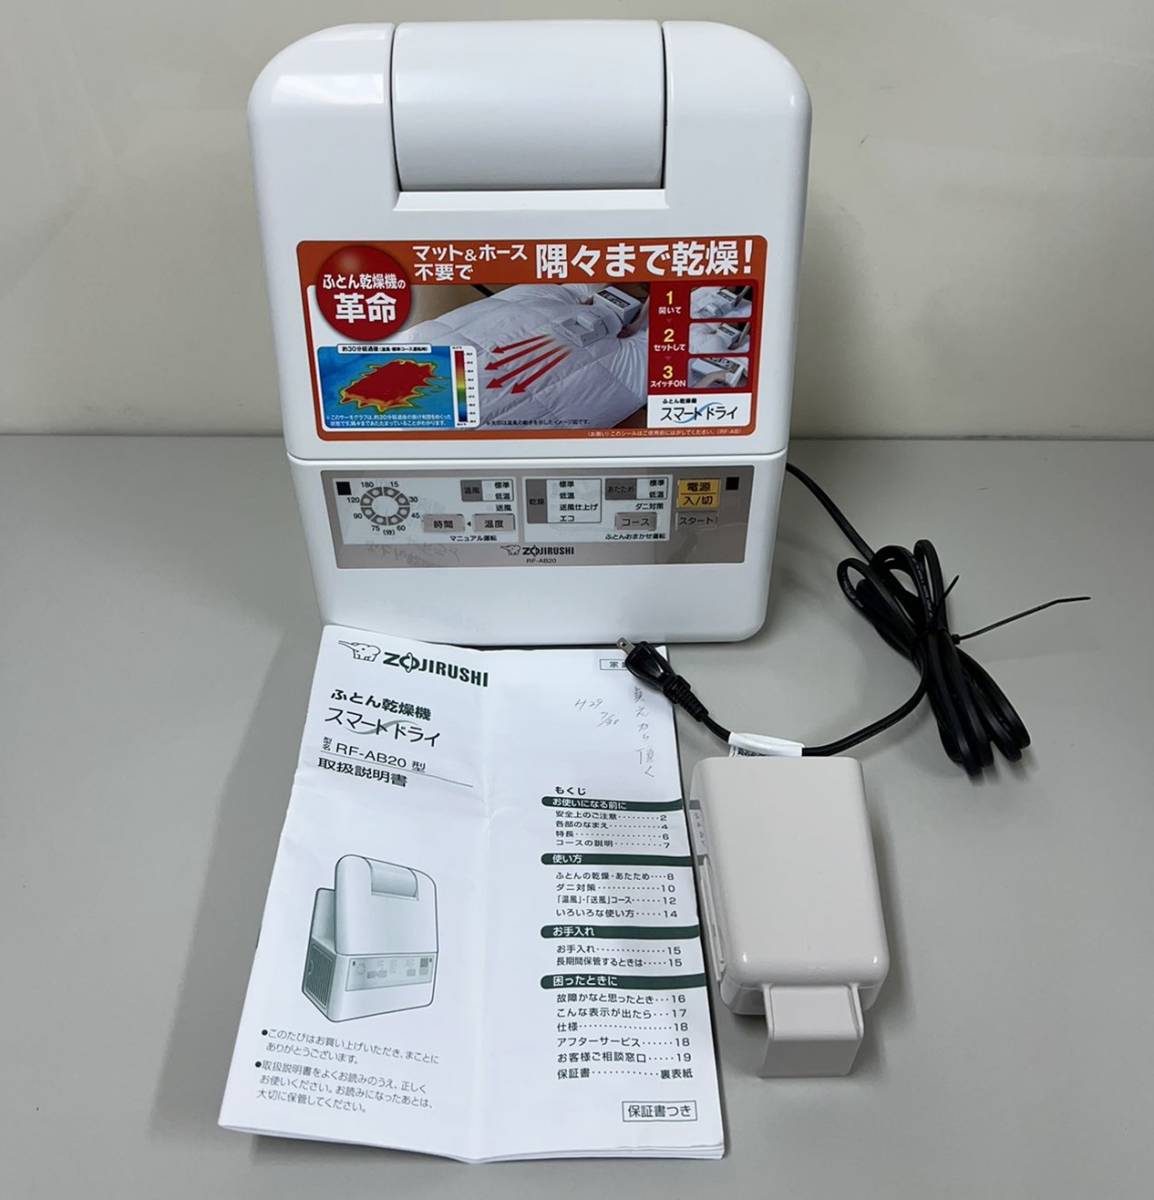 ZOJIRUSHI Zojirushi машина для просушивания футона futon сушильная машина Smart dry RF-AB20-CA б/у 